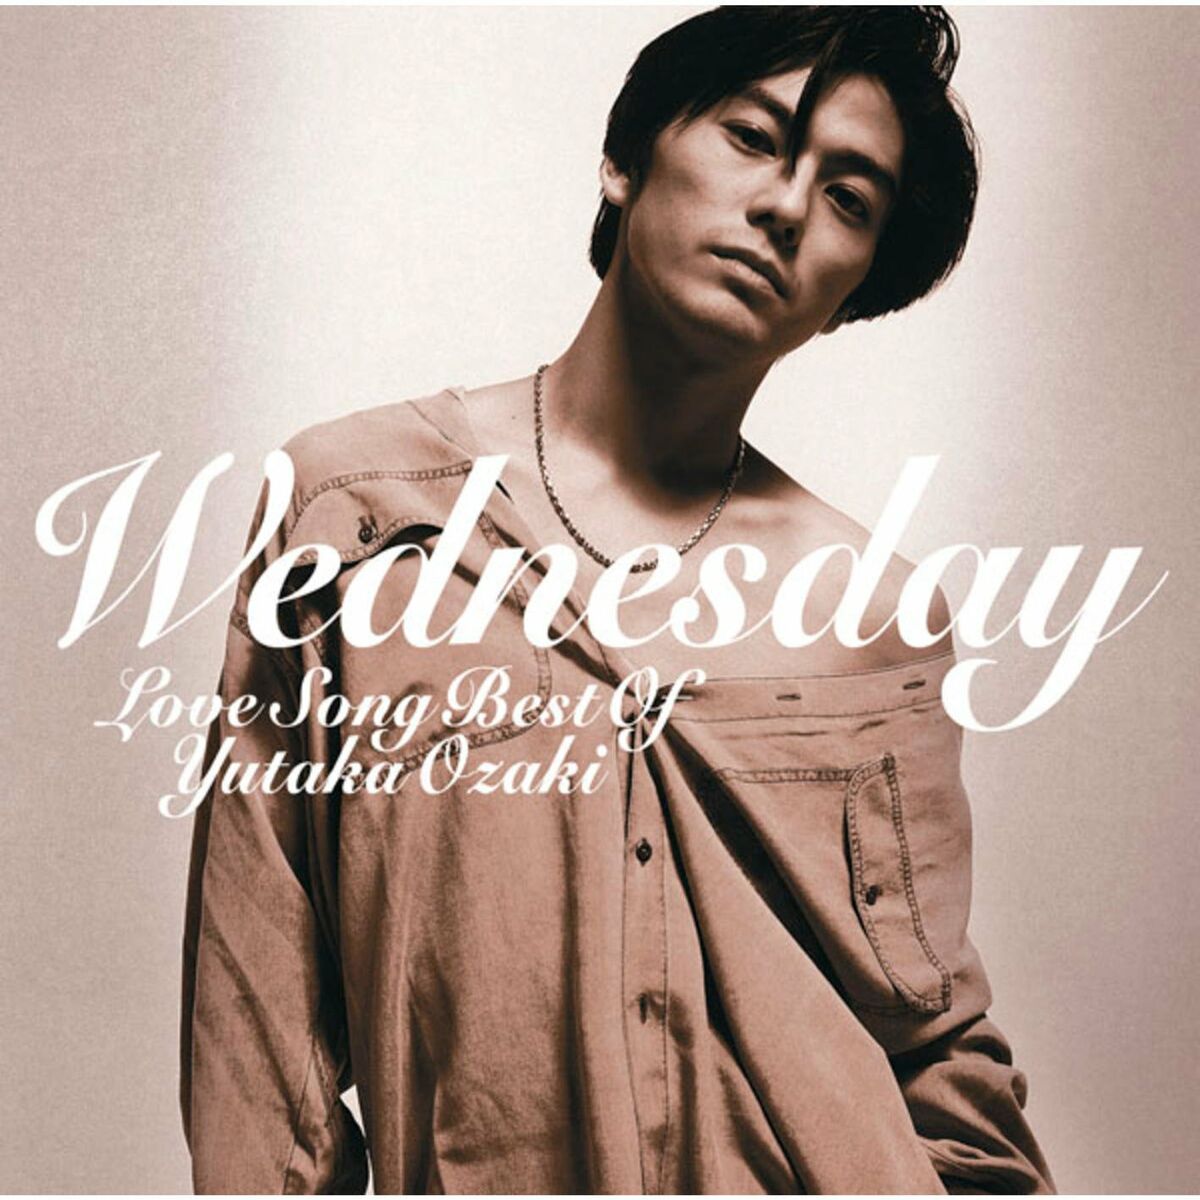 Yutaka Ozaki: albums, songs, playlists | Listen on Deezer